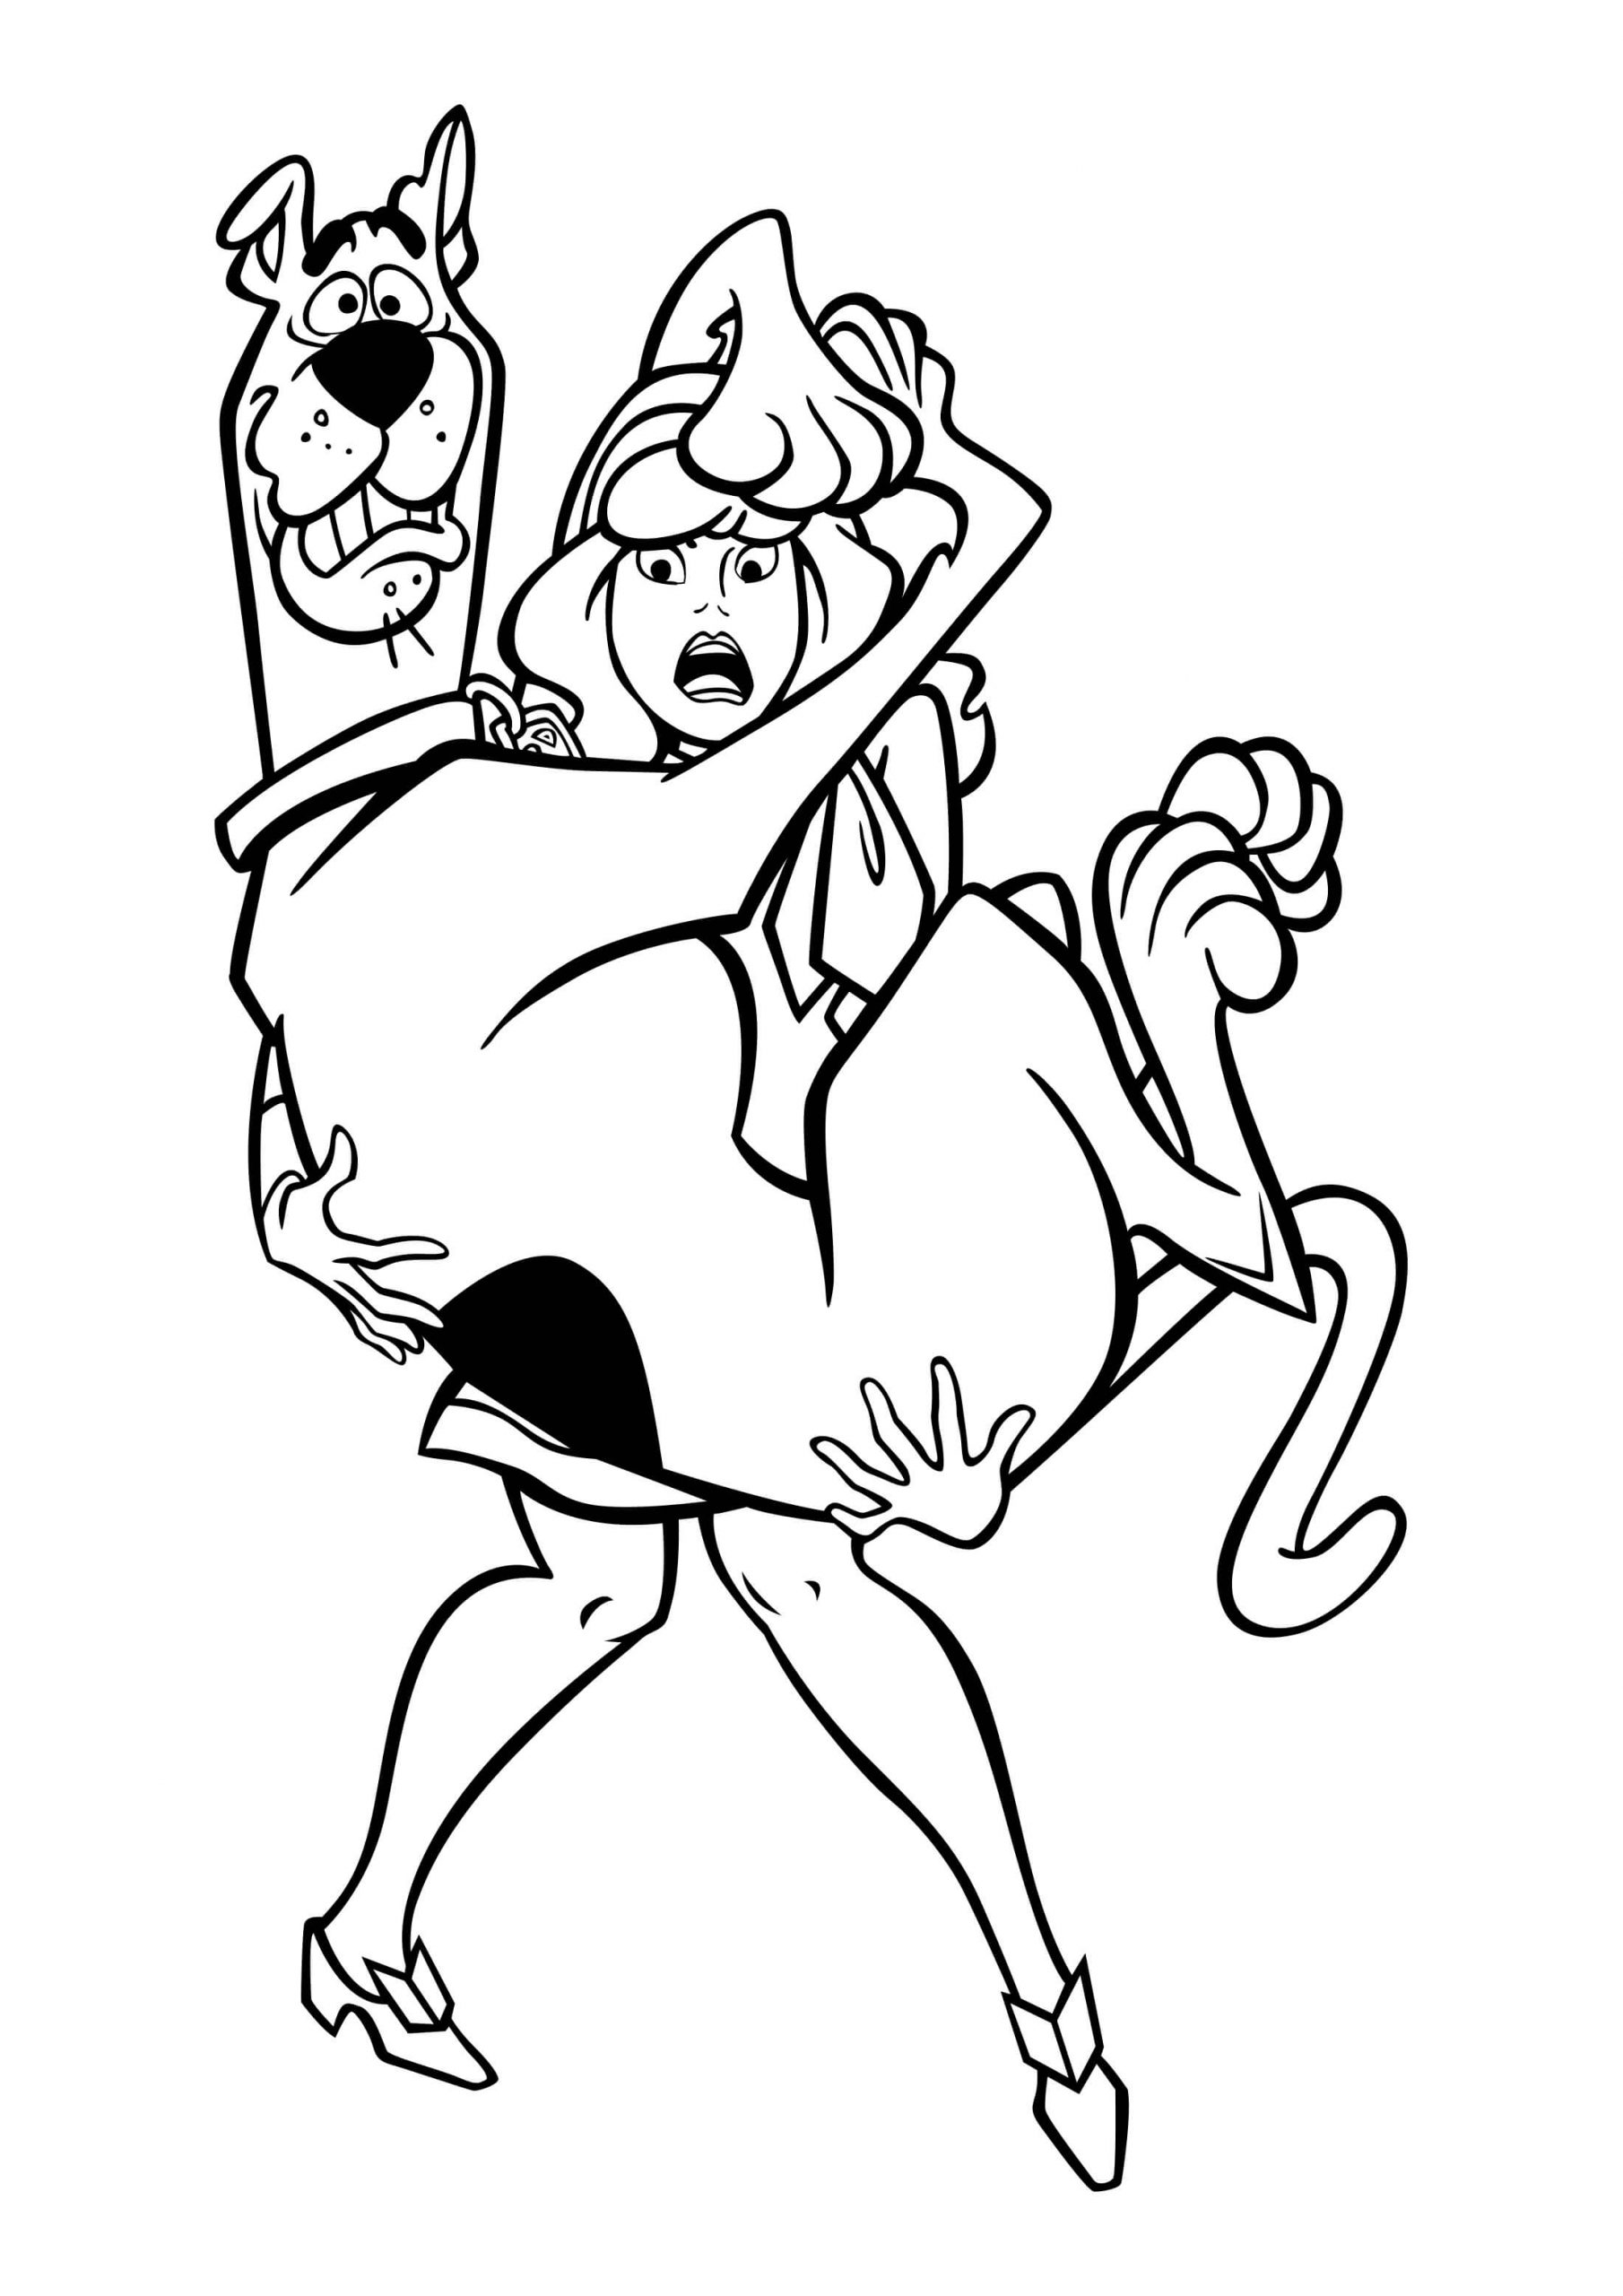 Daphne Blake Segurando Scooby Doo para colorir